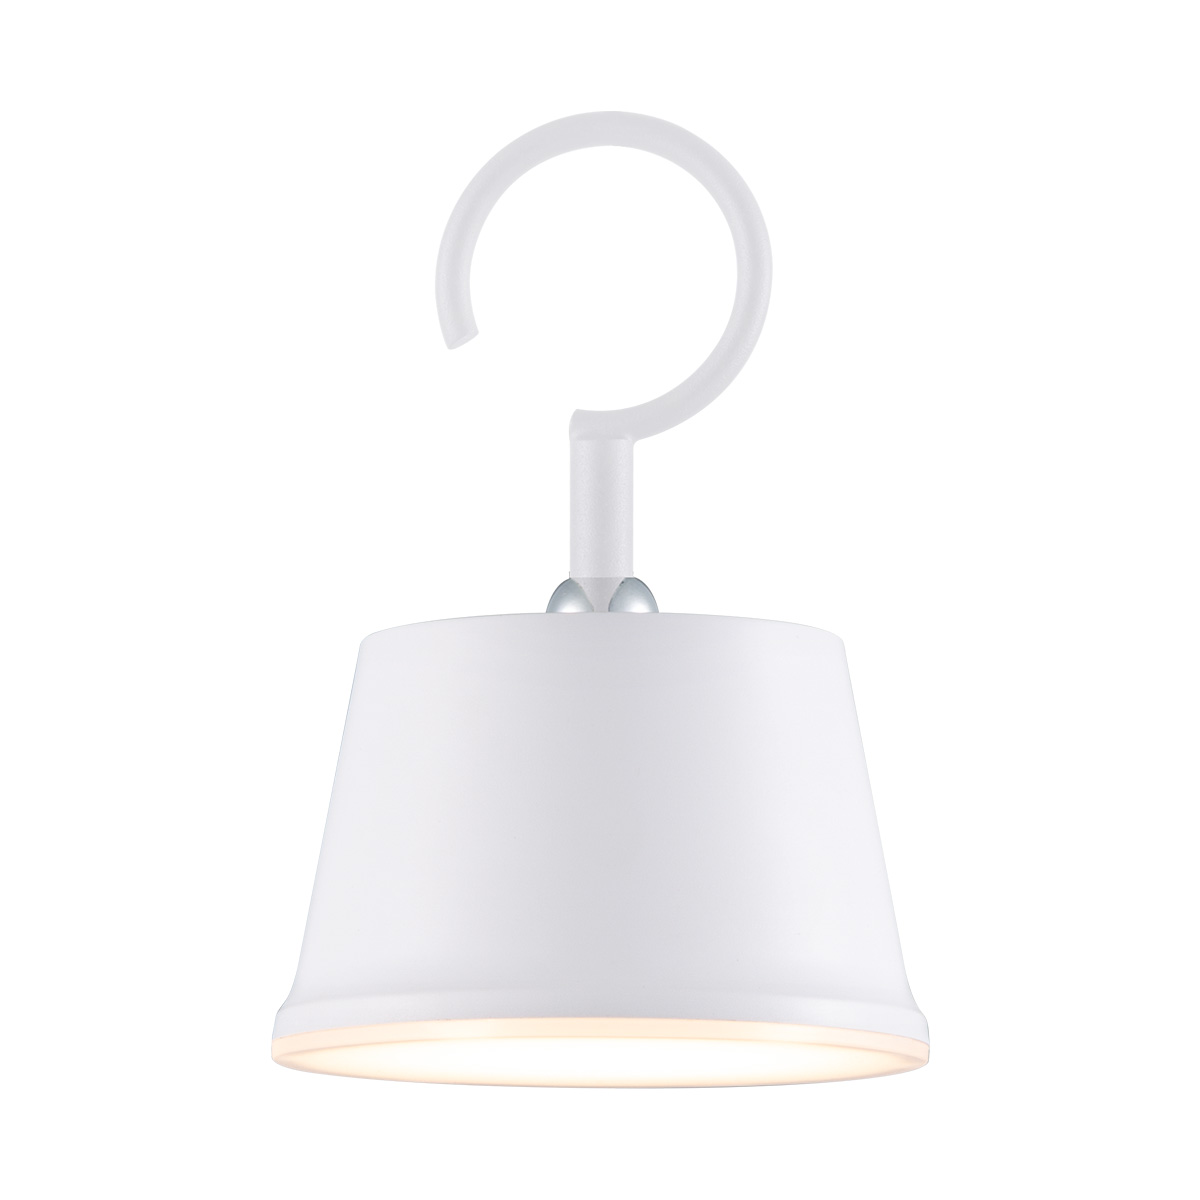 Tangla lighting - TLP7644-01WT - LED Pendant lamp - rechargeable plastic and metal in white - mini LED pendant